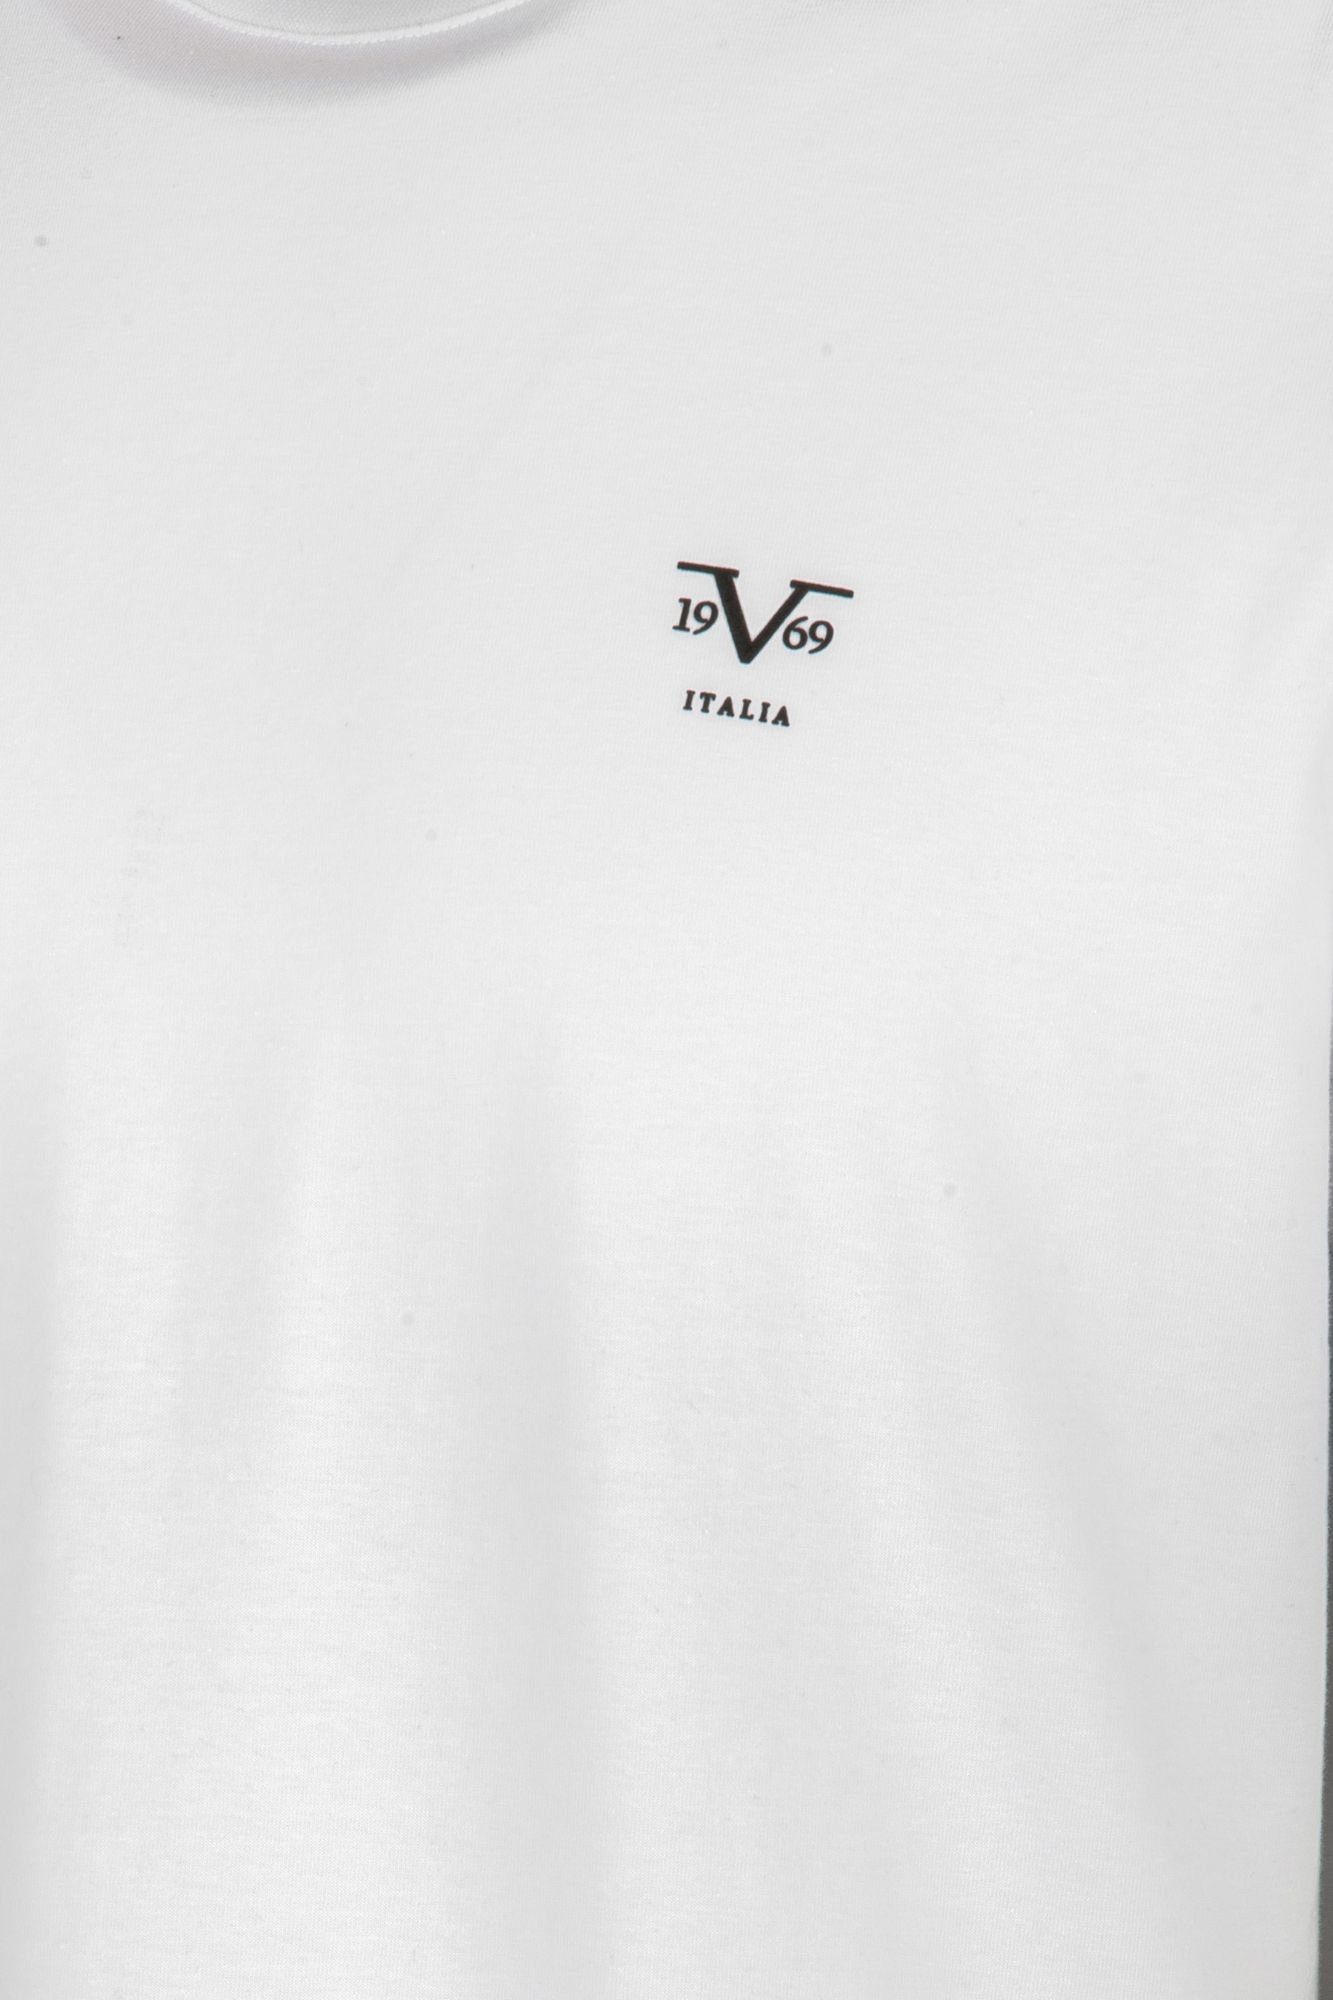 by Rundhalsausschnitt Versace -037 19V69 Luca Italia T-Shirt